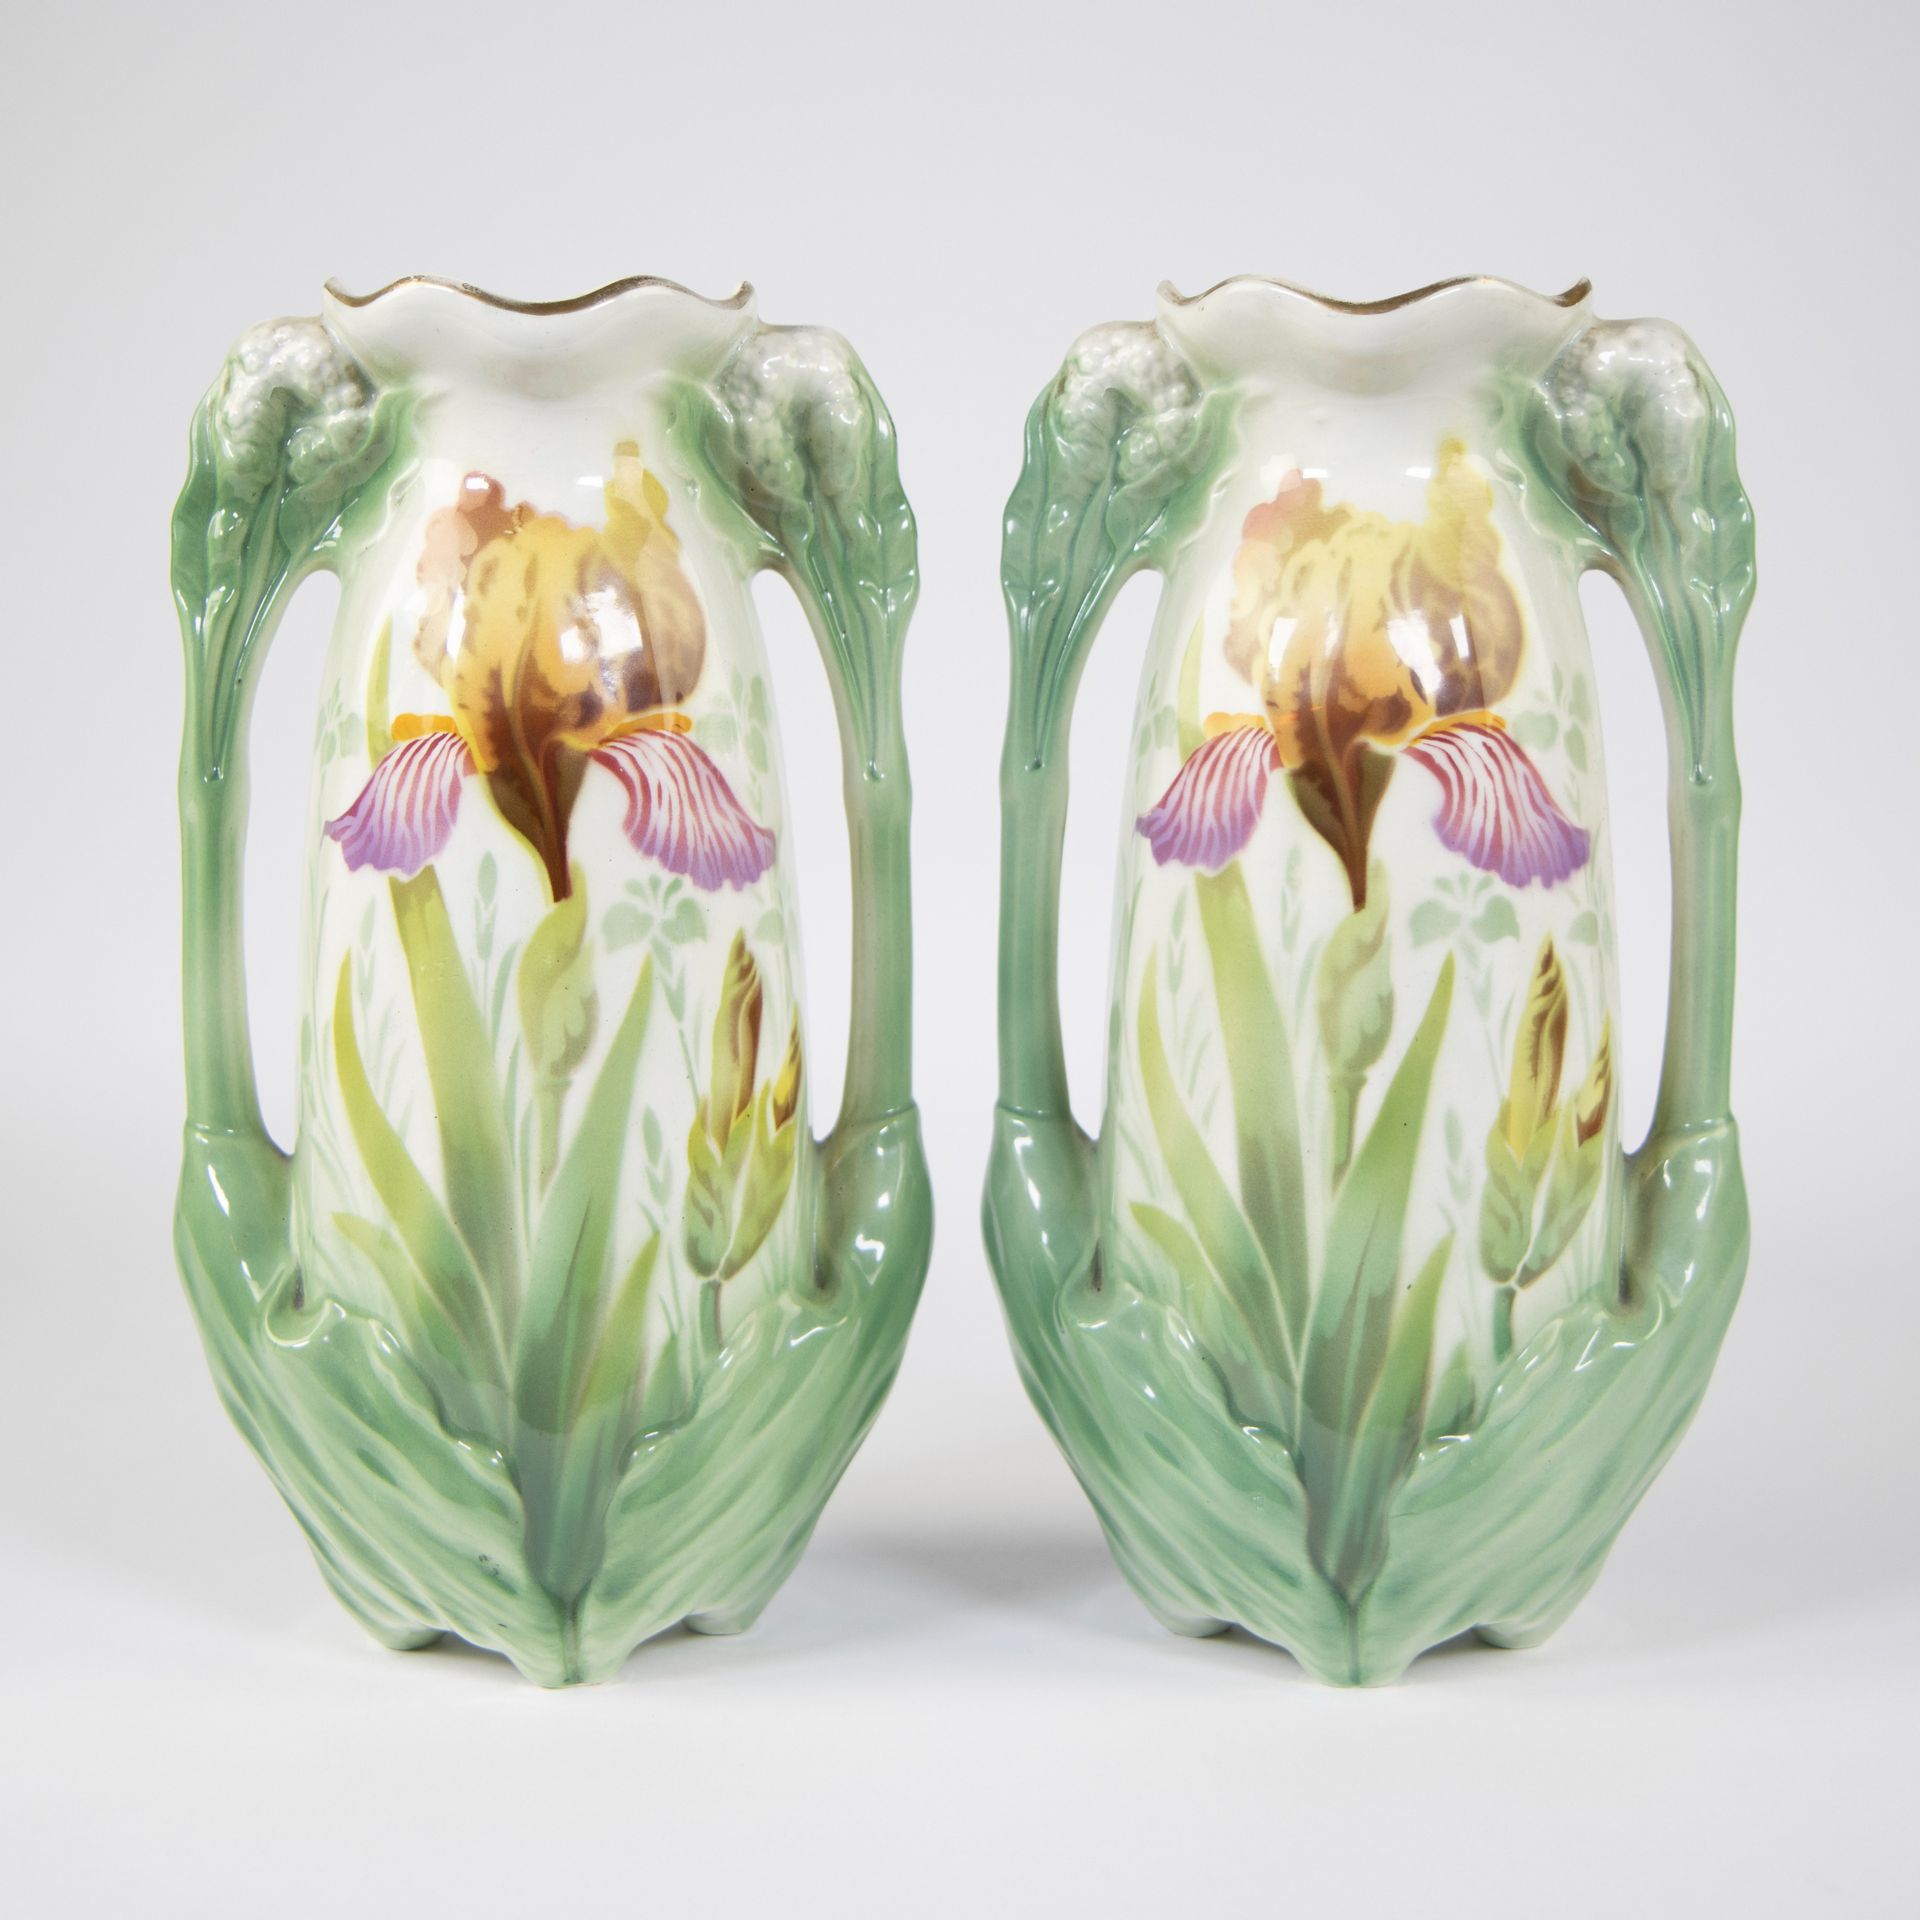 Luneville vases